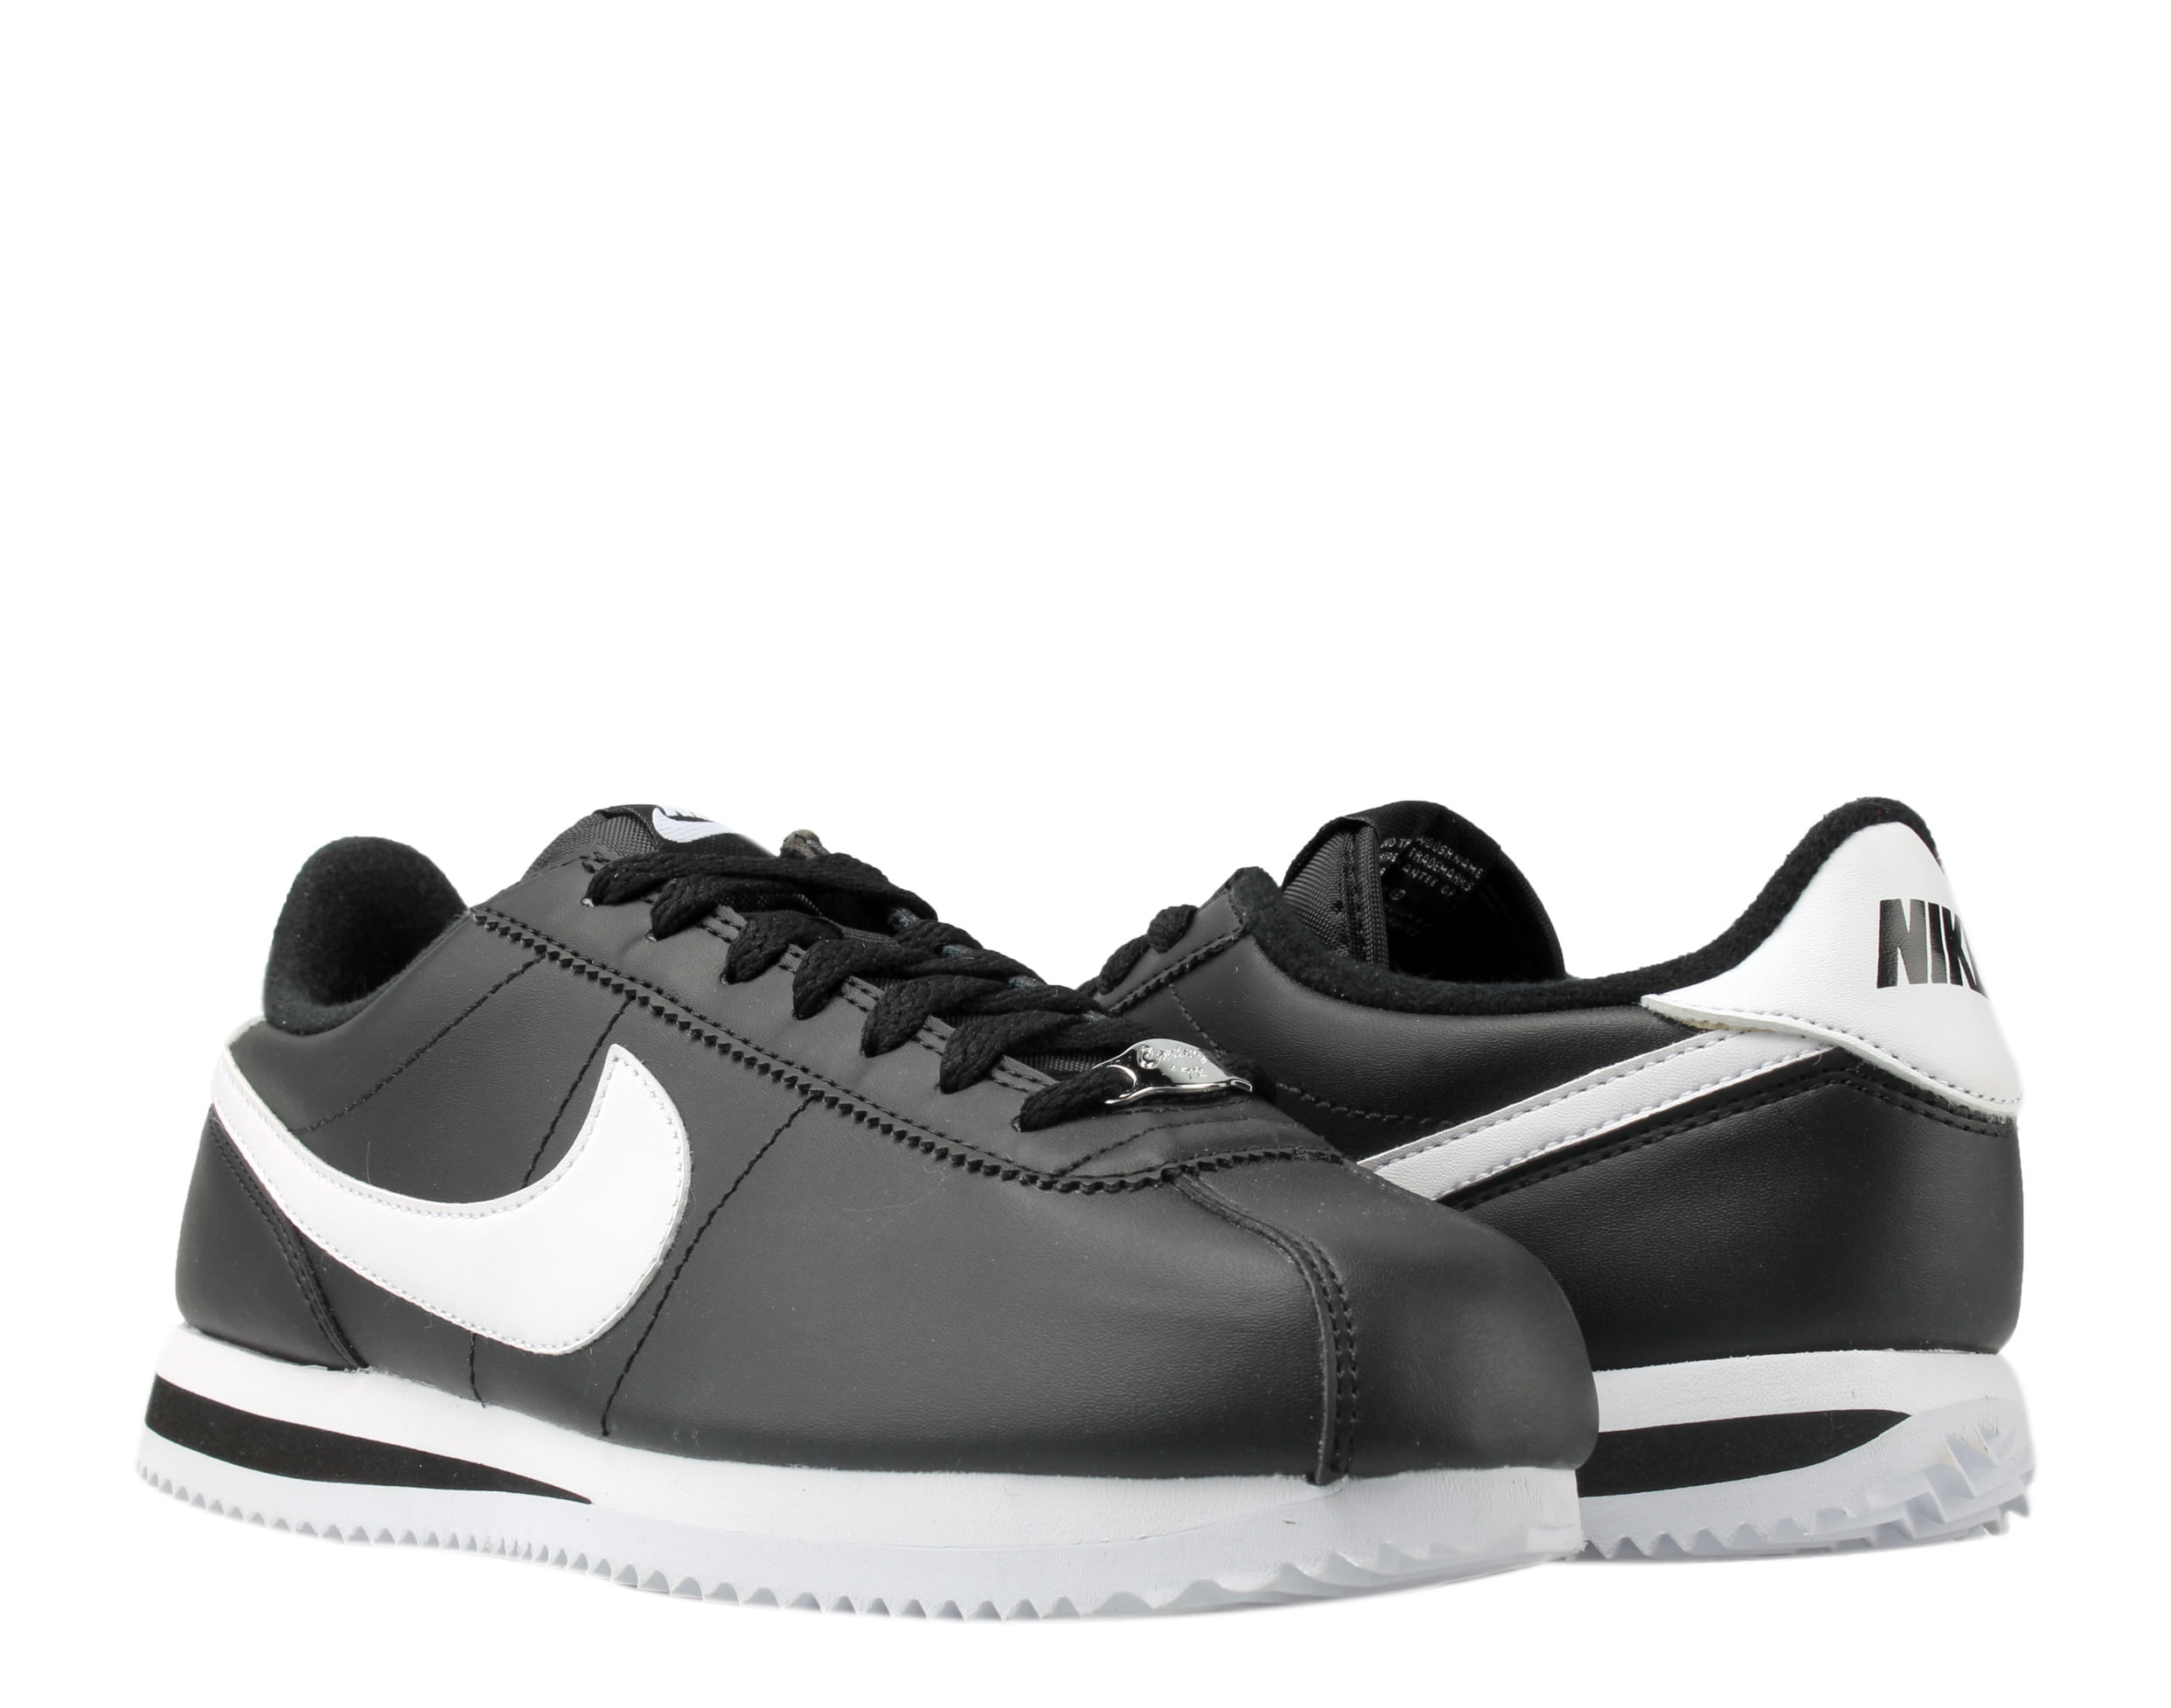 Huérfano comer colección Nike Cortez Basic Leather Men's Running Shoes Size 10.5 - Walmart.com